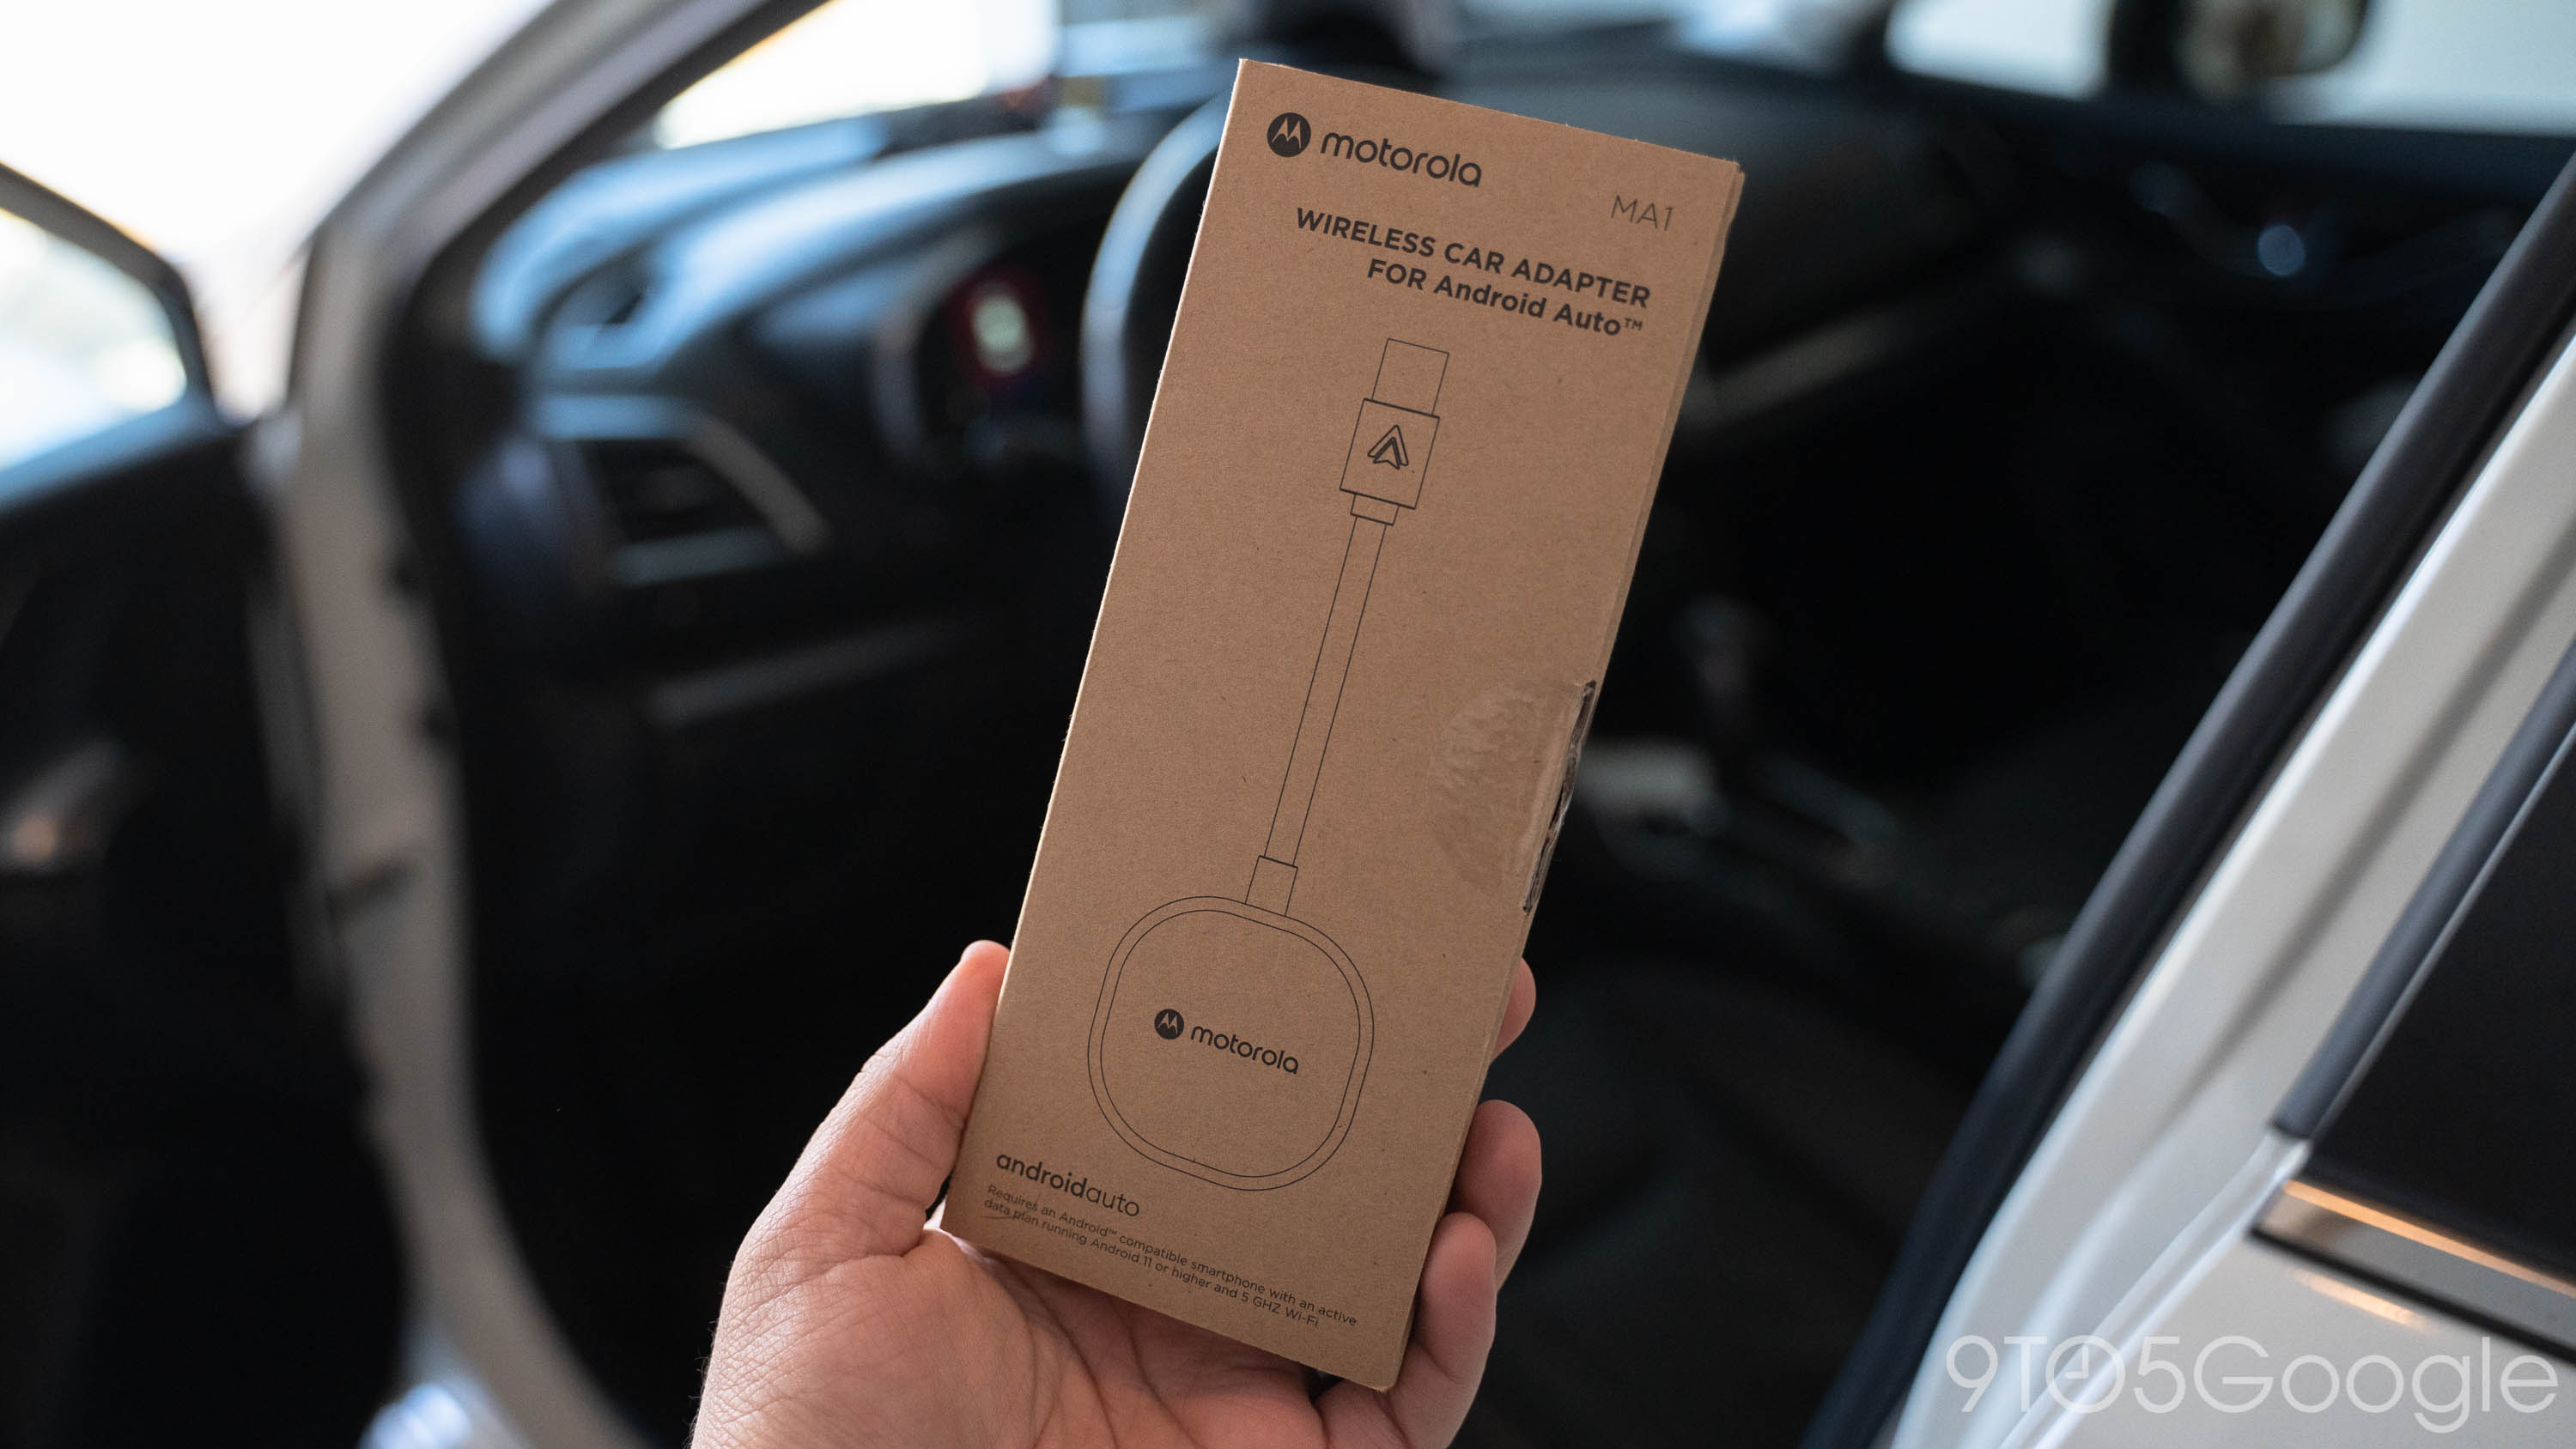 Motorola Ma1 Wireless Android Auto Car Adapter : Target